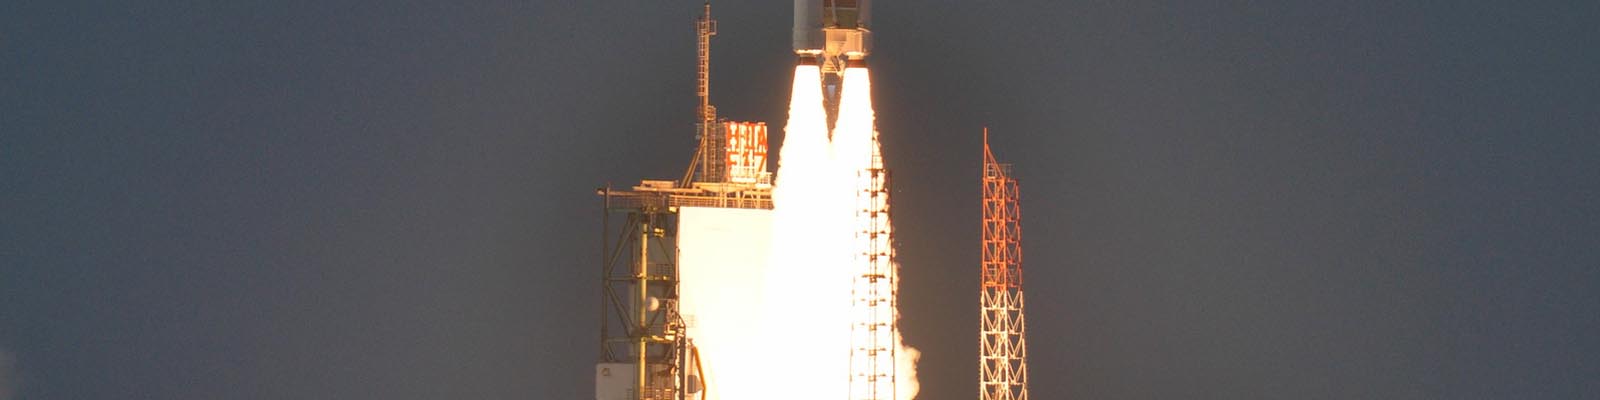 Lancement de la sonde Akatsuki par la fusée H-IIA